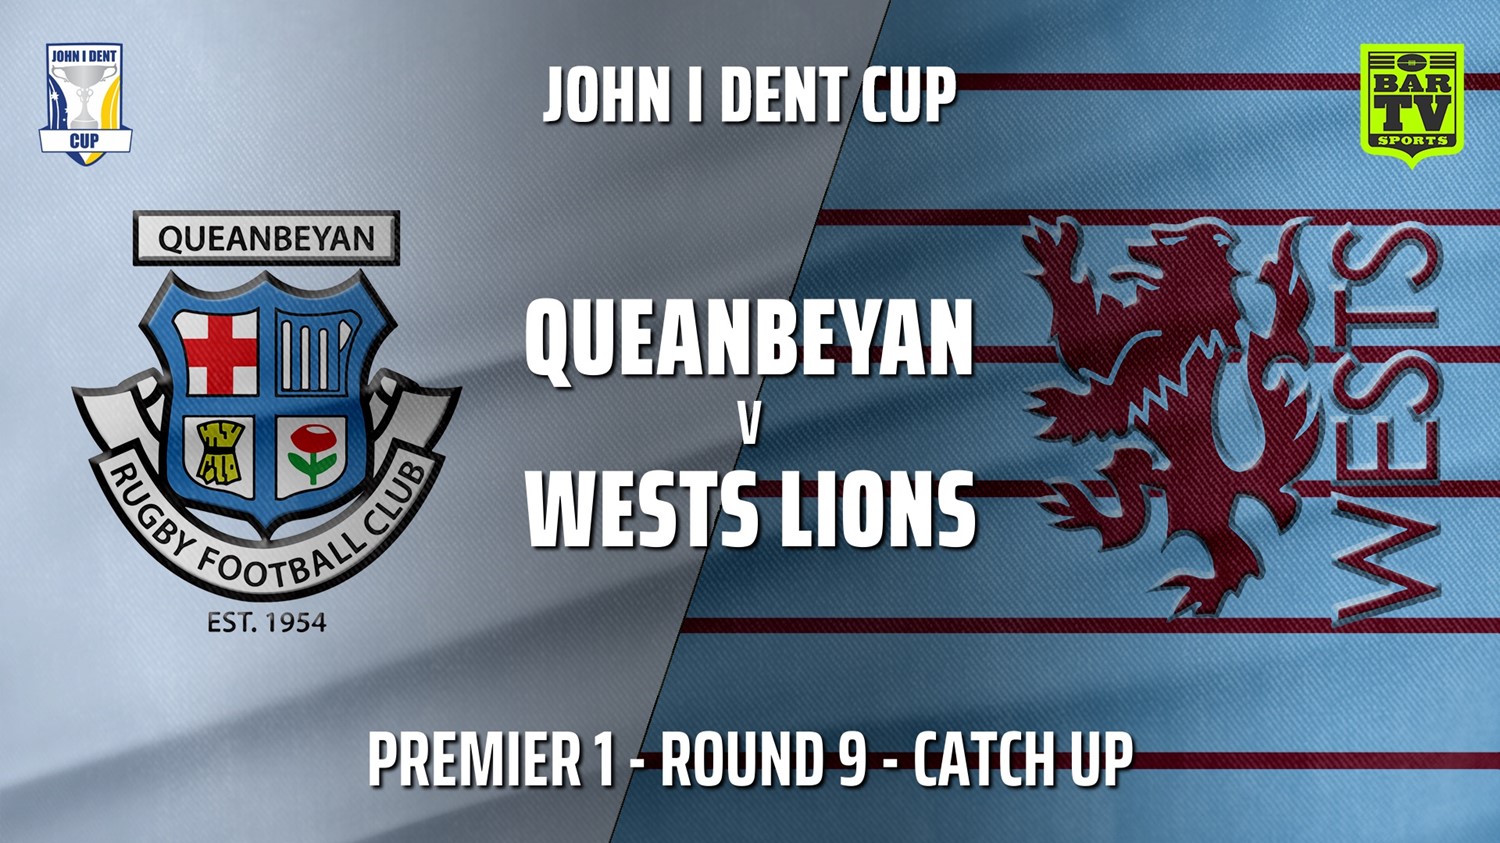 210716-John I Dent (ACT) Round 9 - Catch up - Premier 1 - Queanbeyan Whites v Wests Lions (1) Slate Image